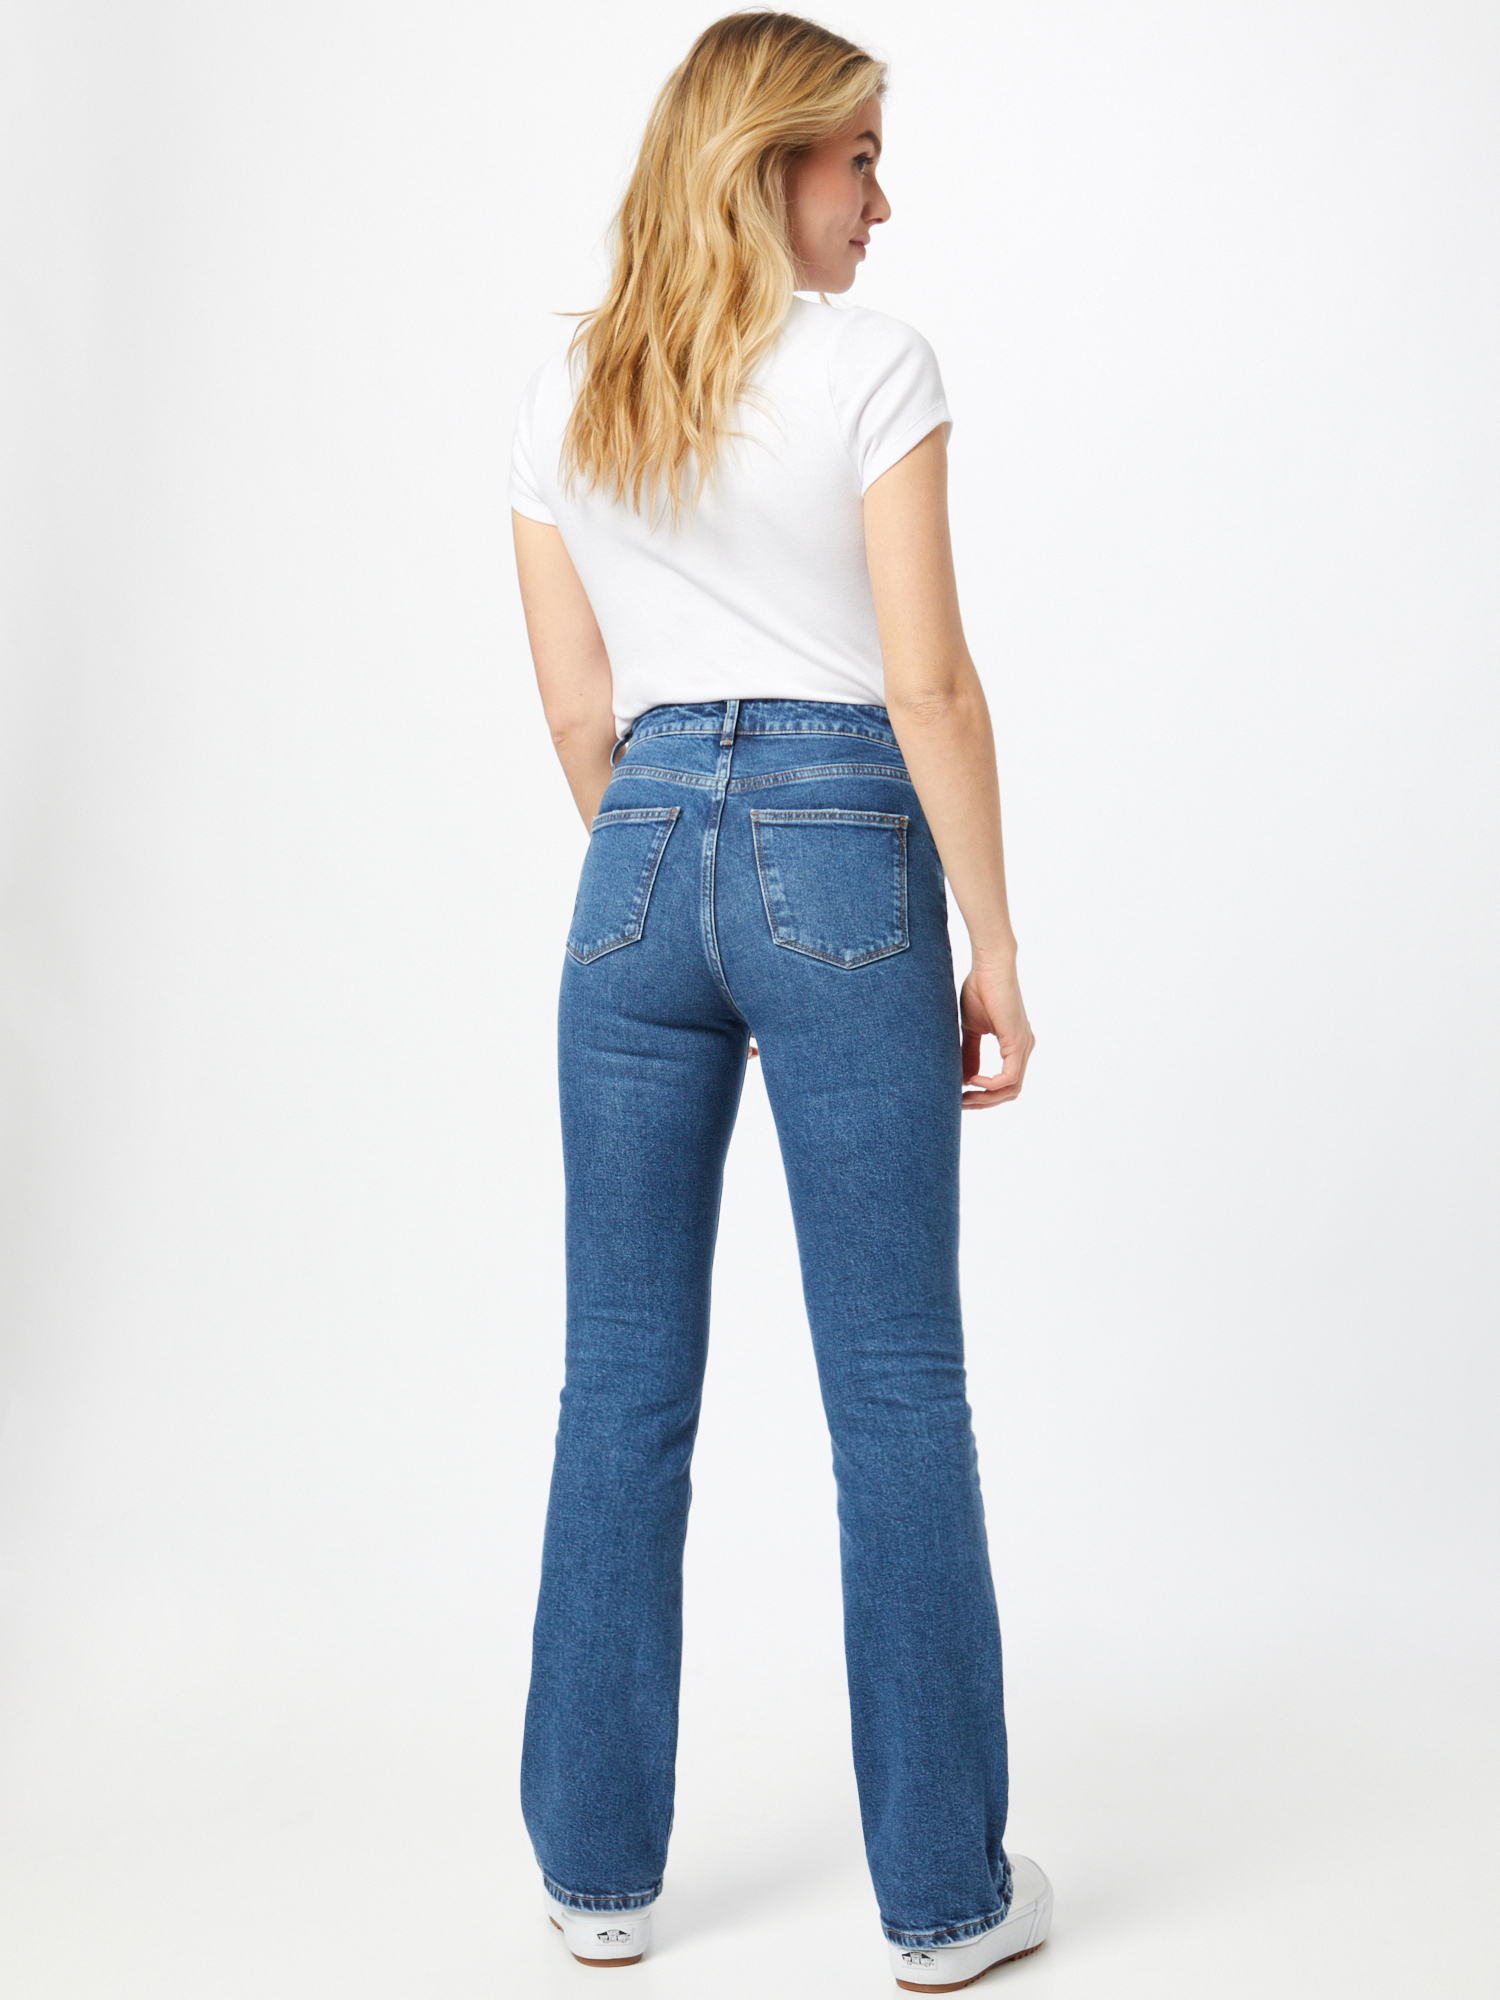 NEW LOOK Jeans DIAGON in Blau 